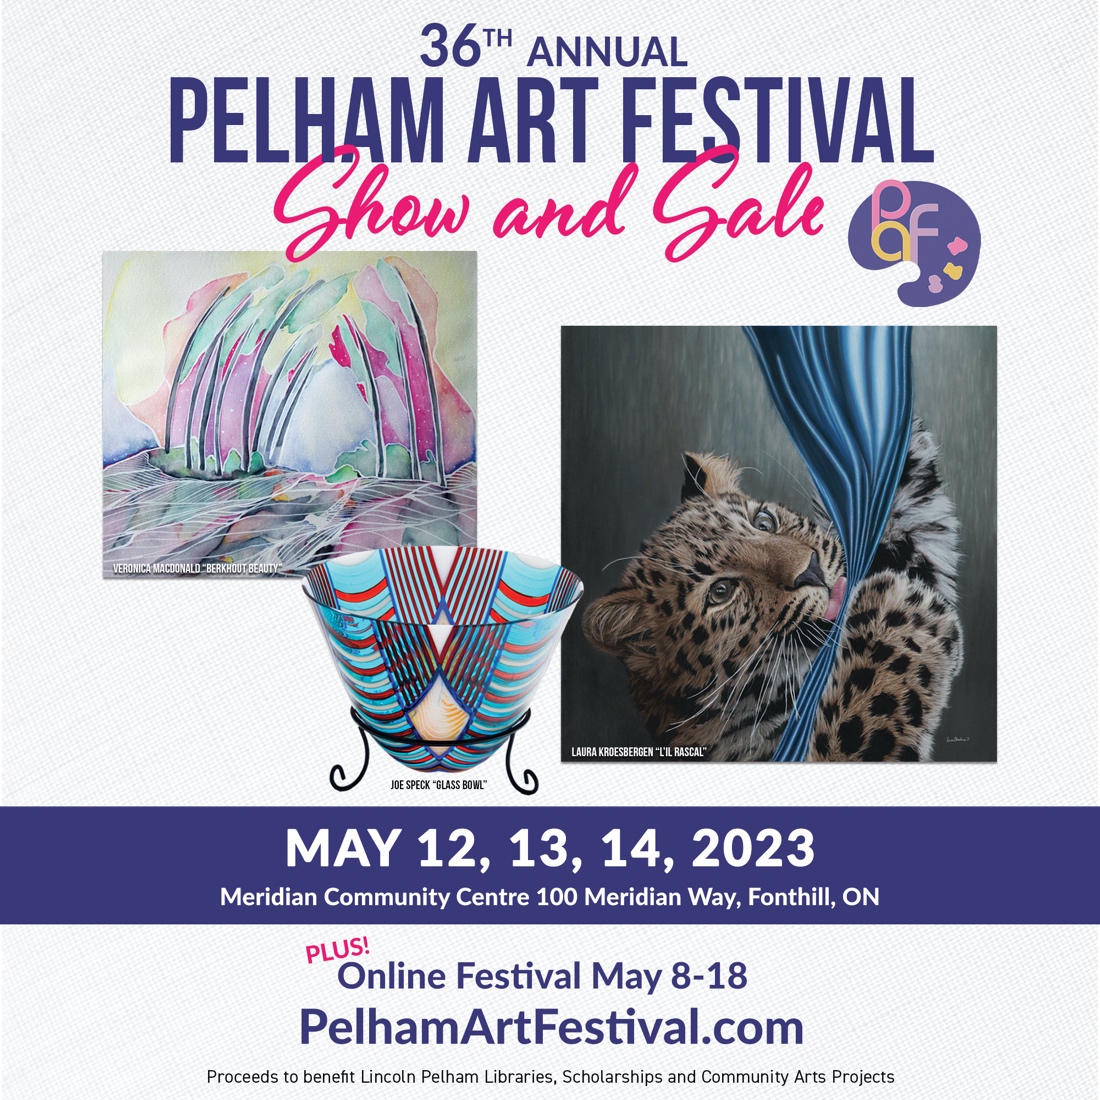 #SaveTheDate 36th Annual Pelham Art Festival Show and Sale